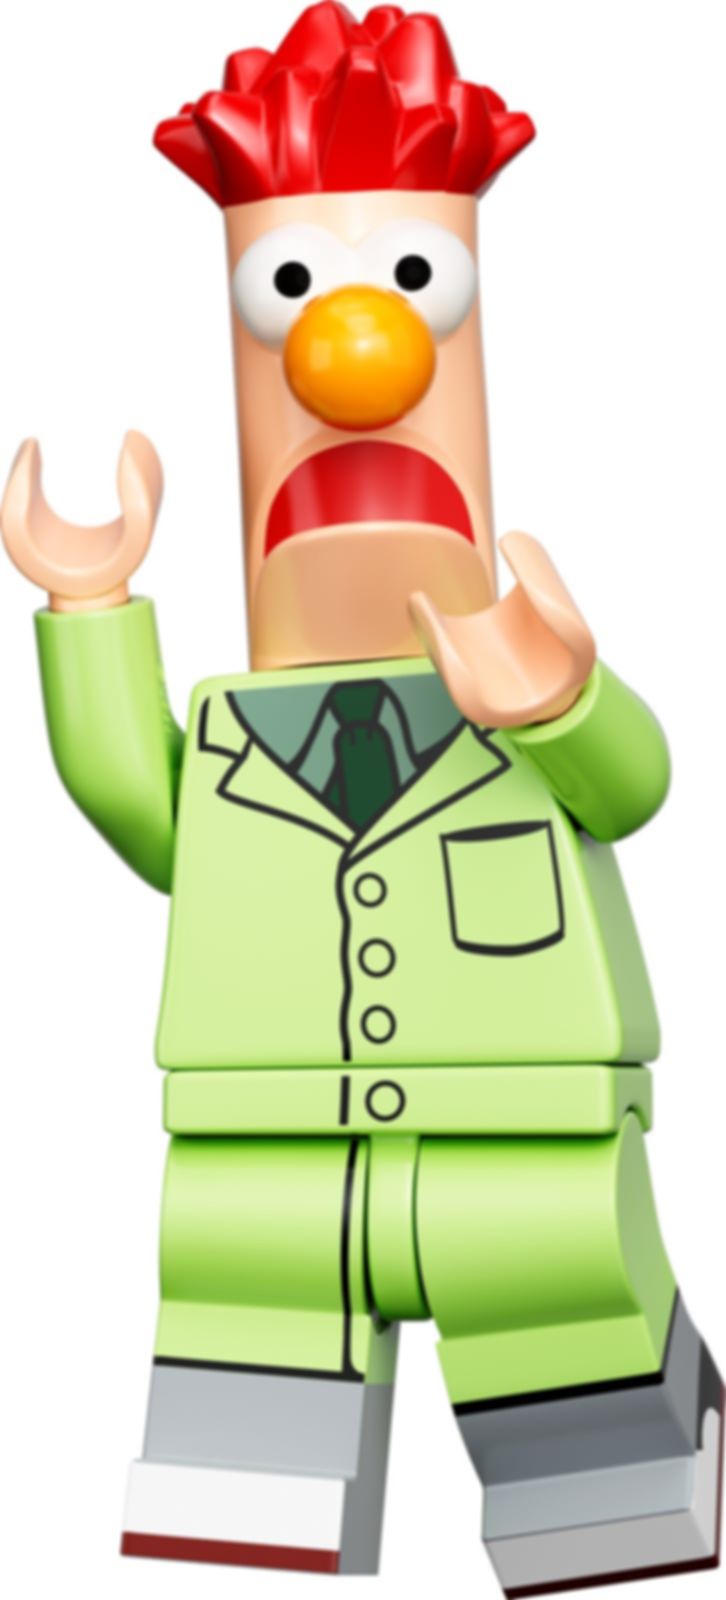 LEGO® Minifigures Les Muppets figurines